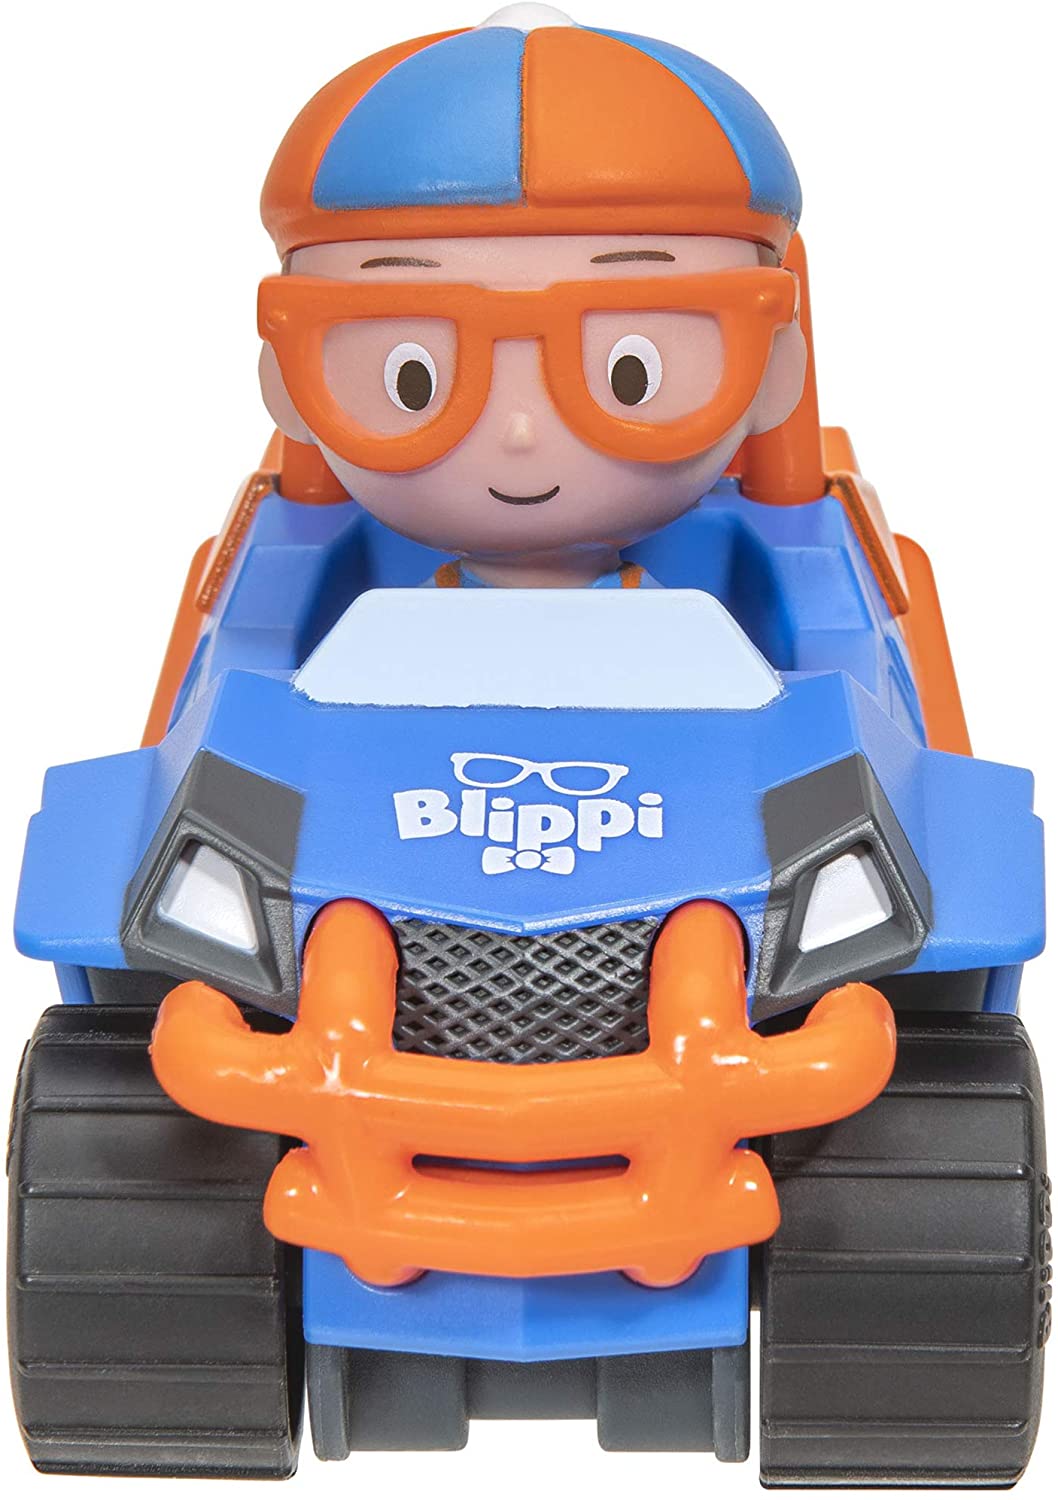 Blippi Mini Cars and Trucks Vehicles with Figure - Assortment Styles